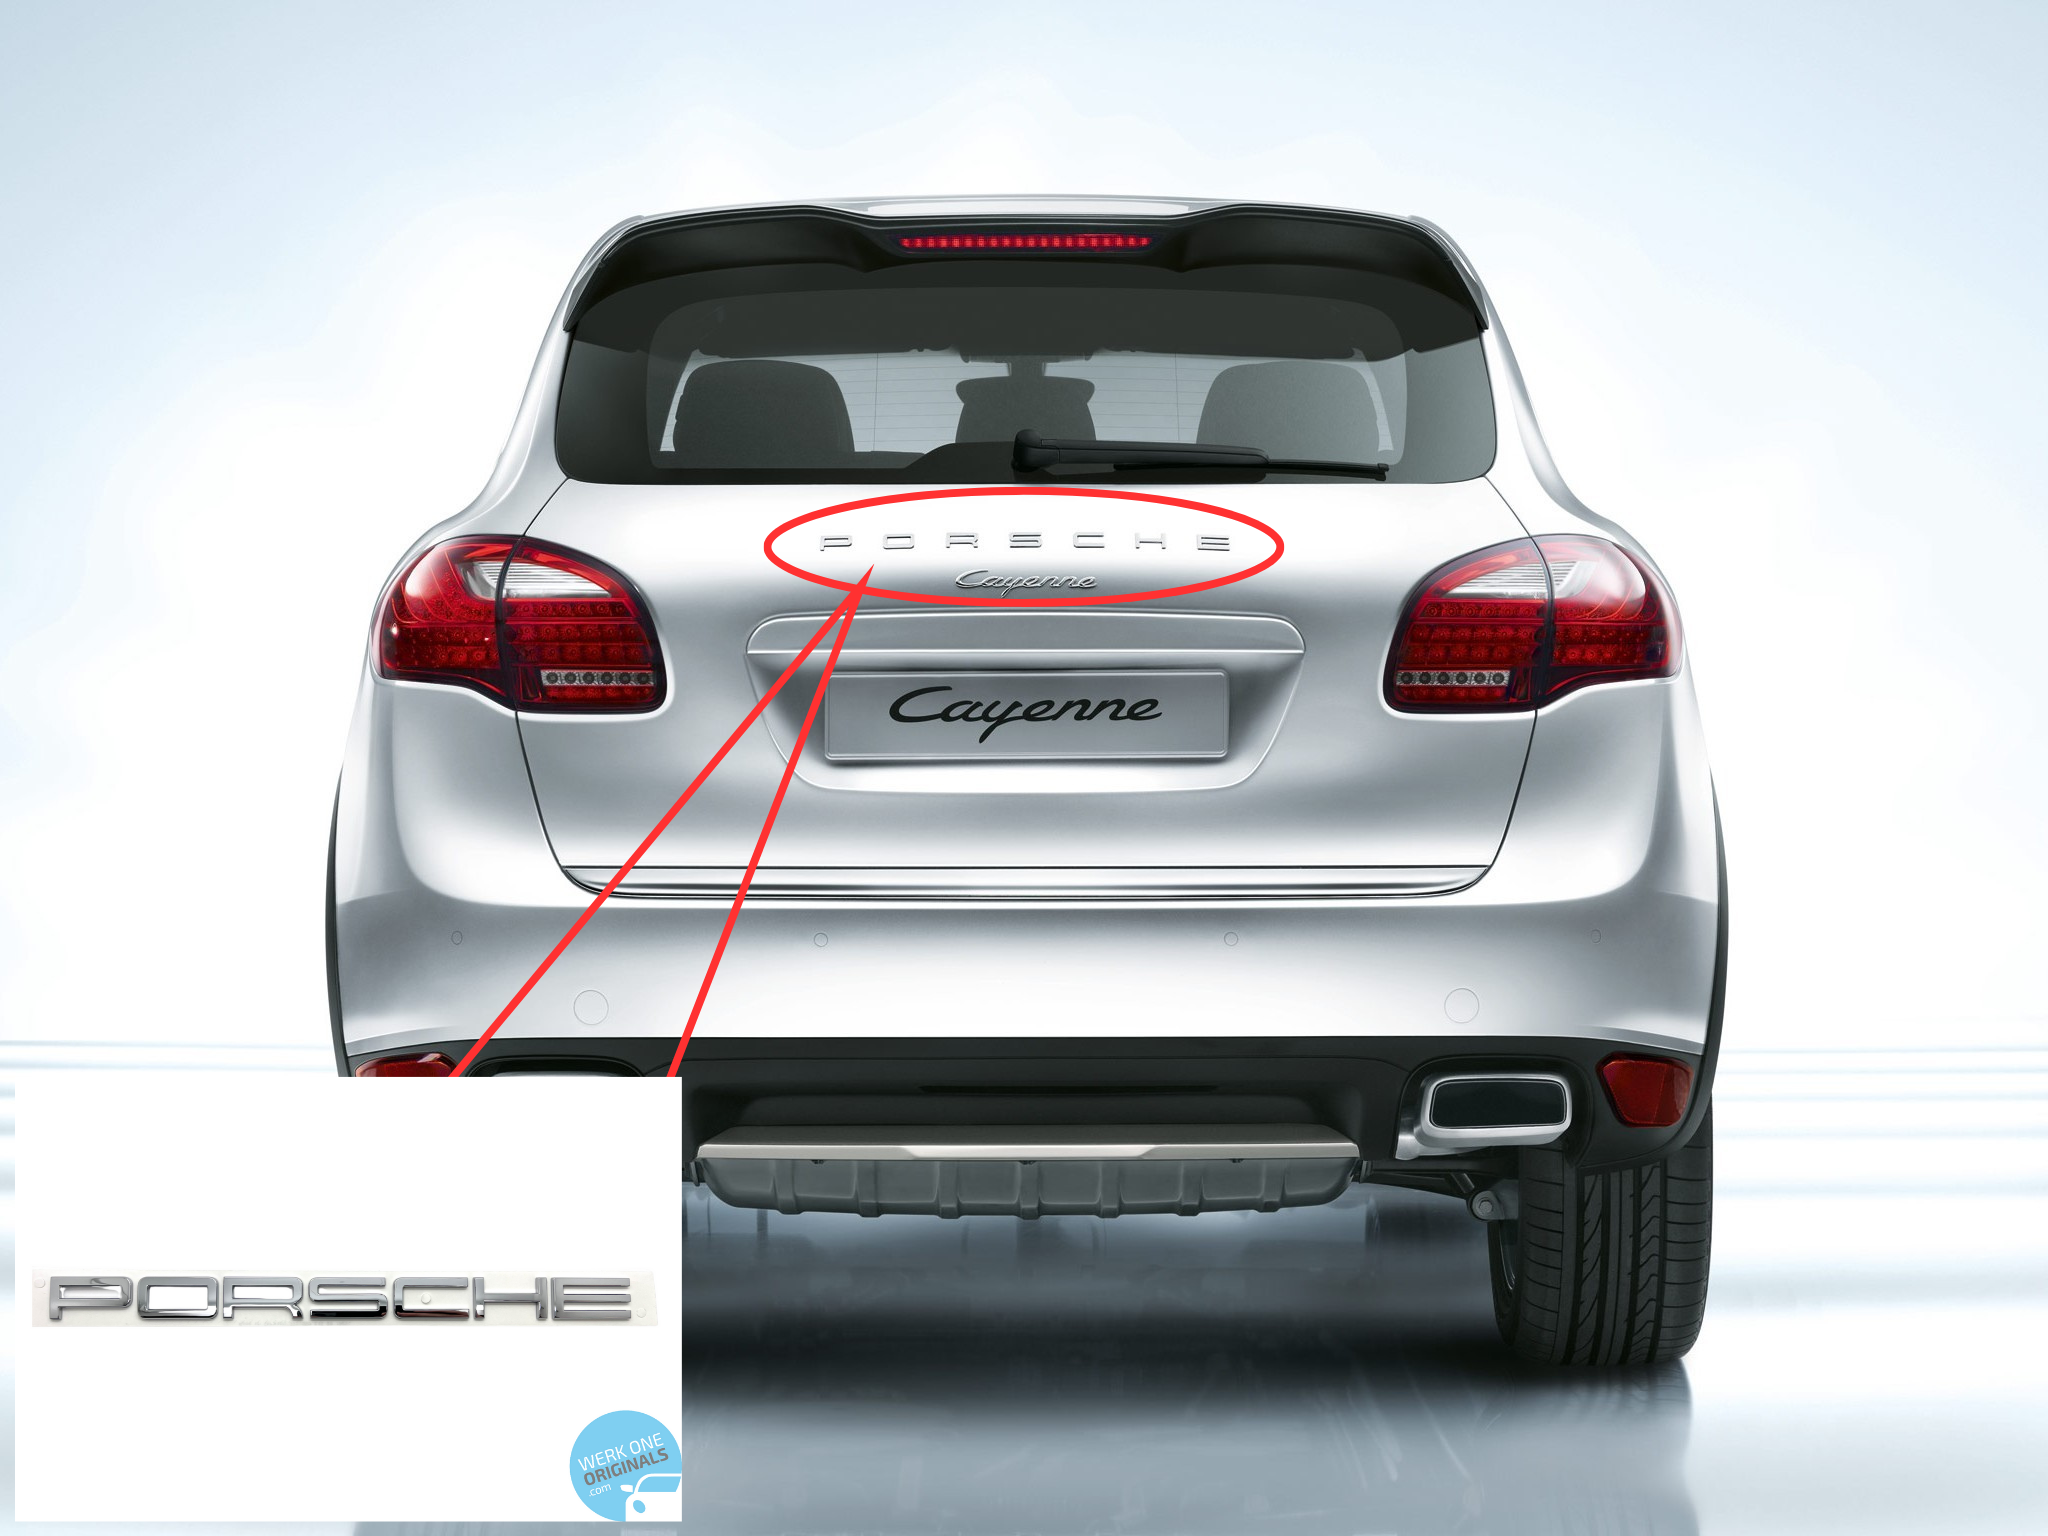 Porsche 'PORSCHE' Script Logo Rear Badge in Chrome Silver for Cayenne Type 958 Models